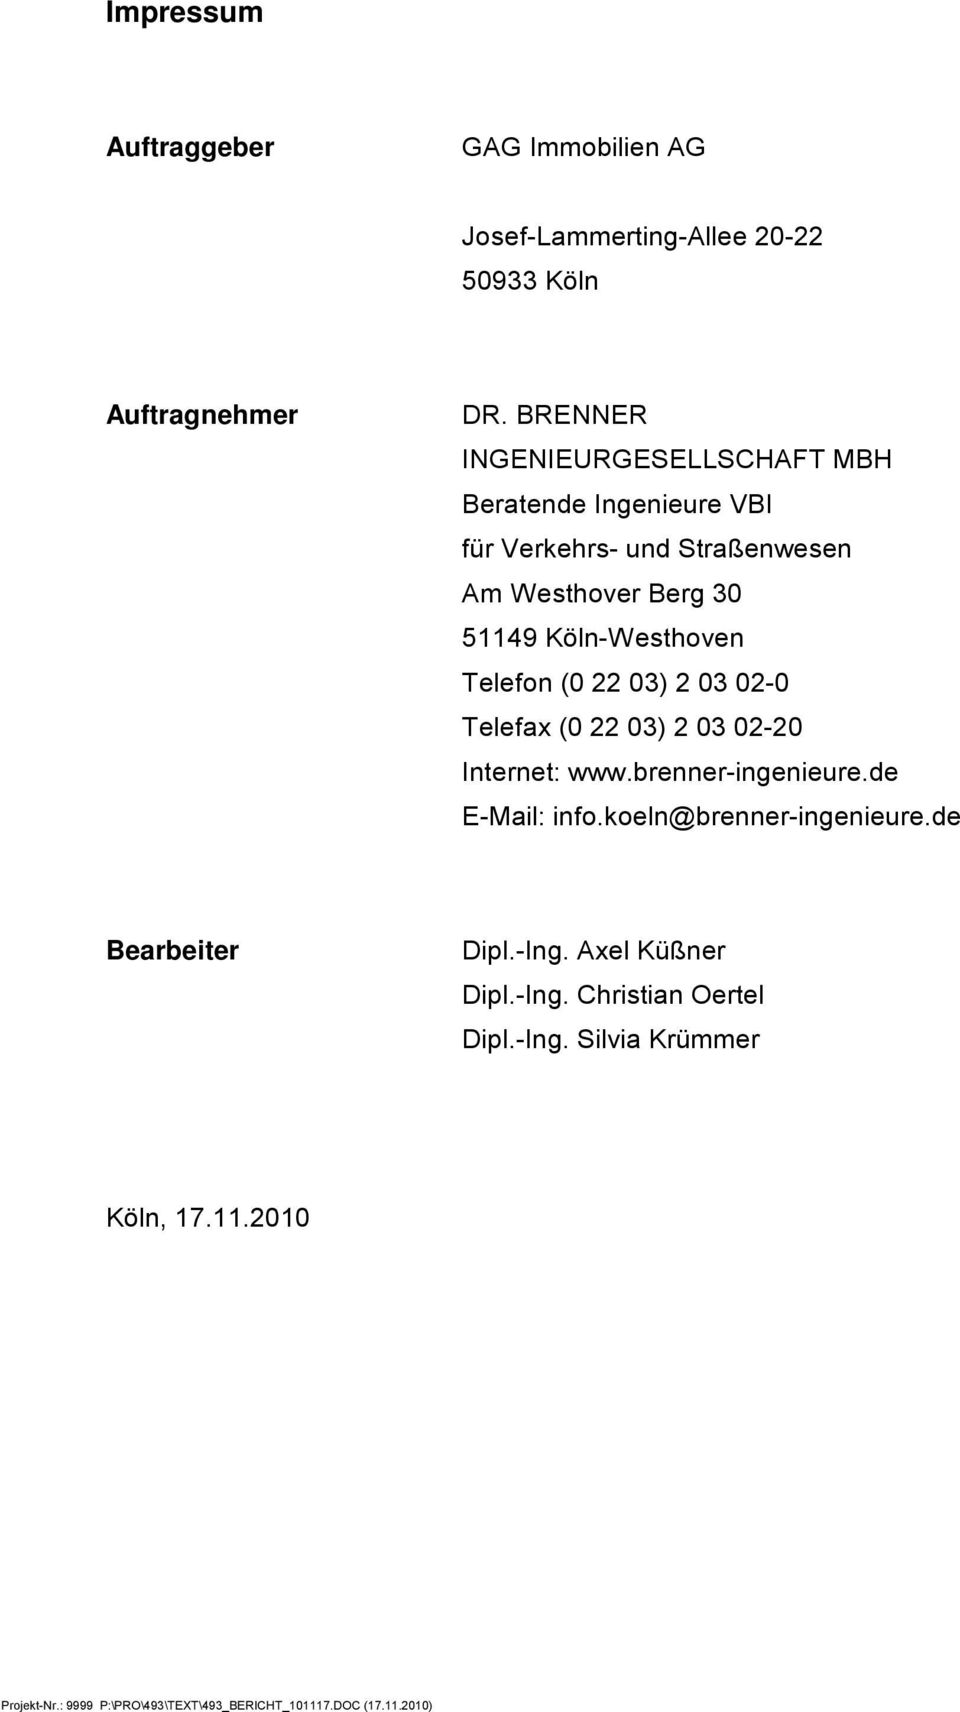 Köln-Westhoven Telefon (0 22 03) 2 03 02-0 Telefax (0 22 03) 2 03 02-20 Internet: www.brenner-ingenieure.